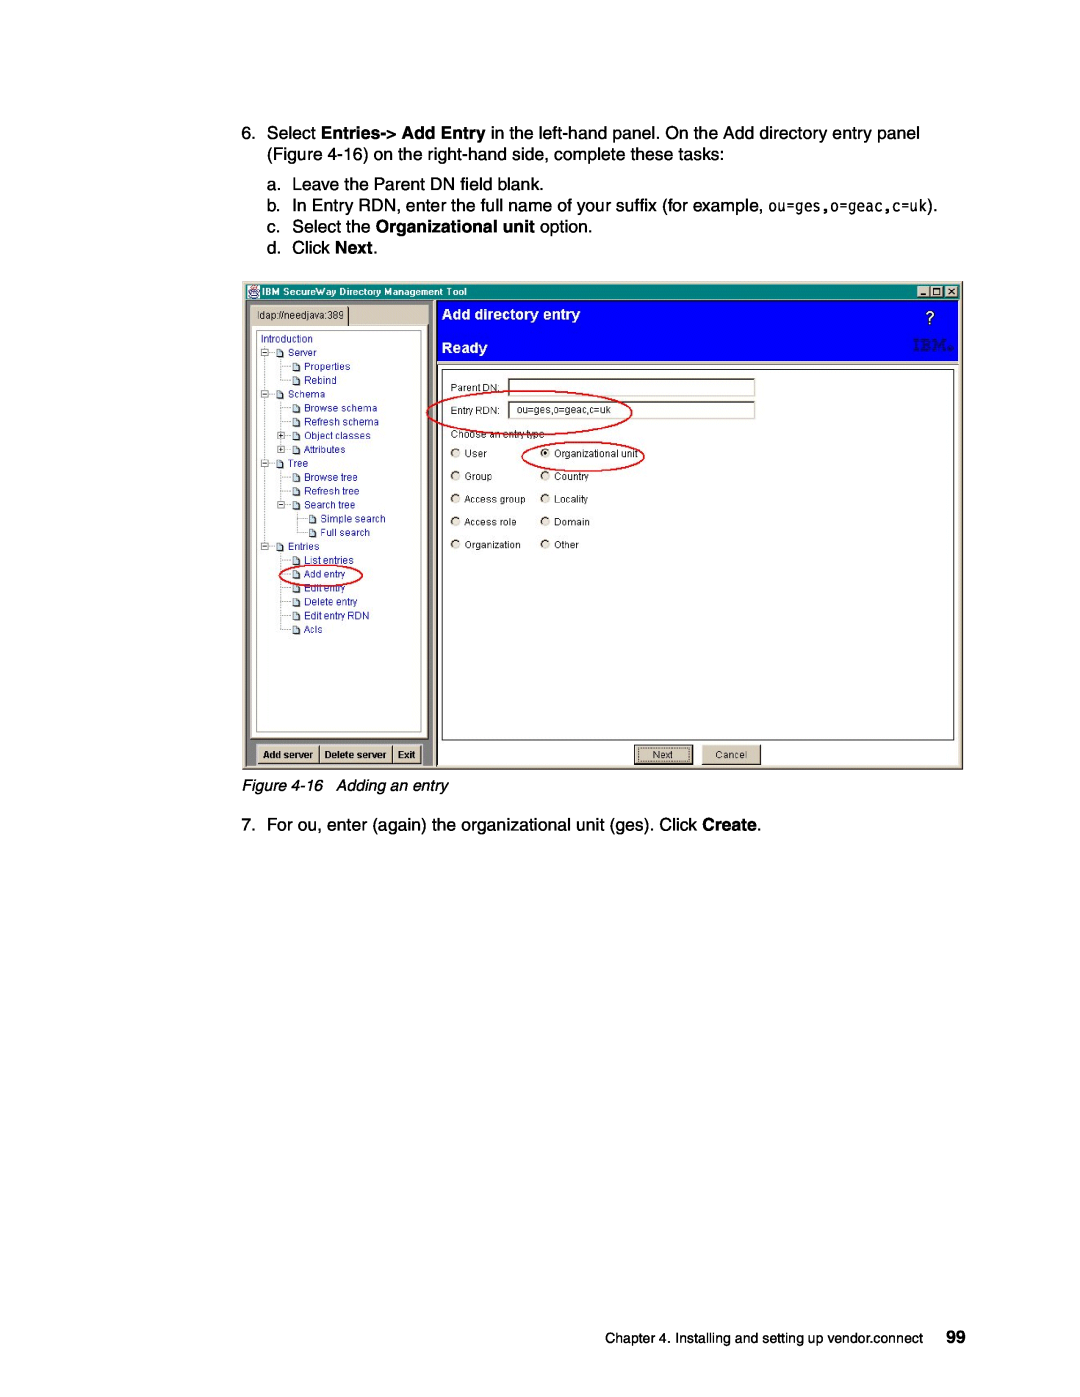 IBM SG24-6526-00 manual c. Select the Organizational unit option 